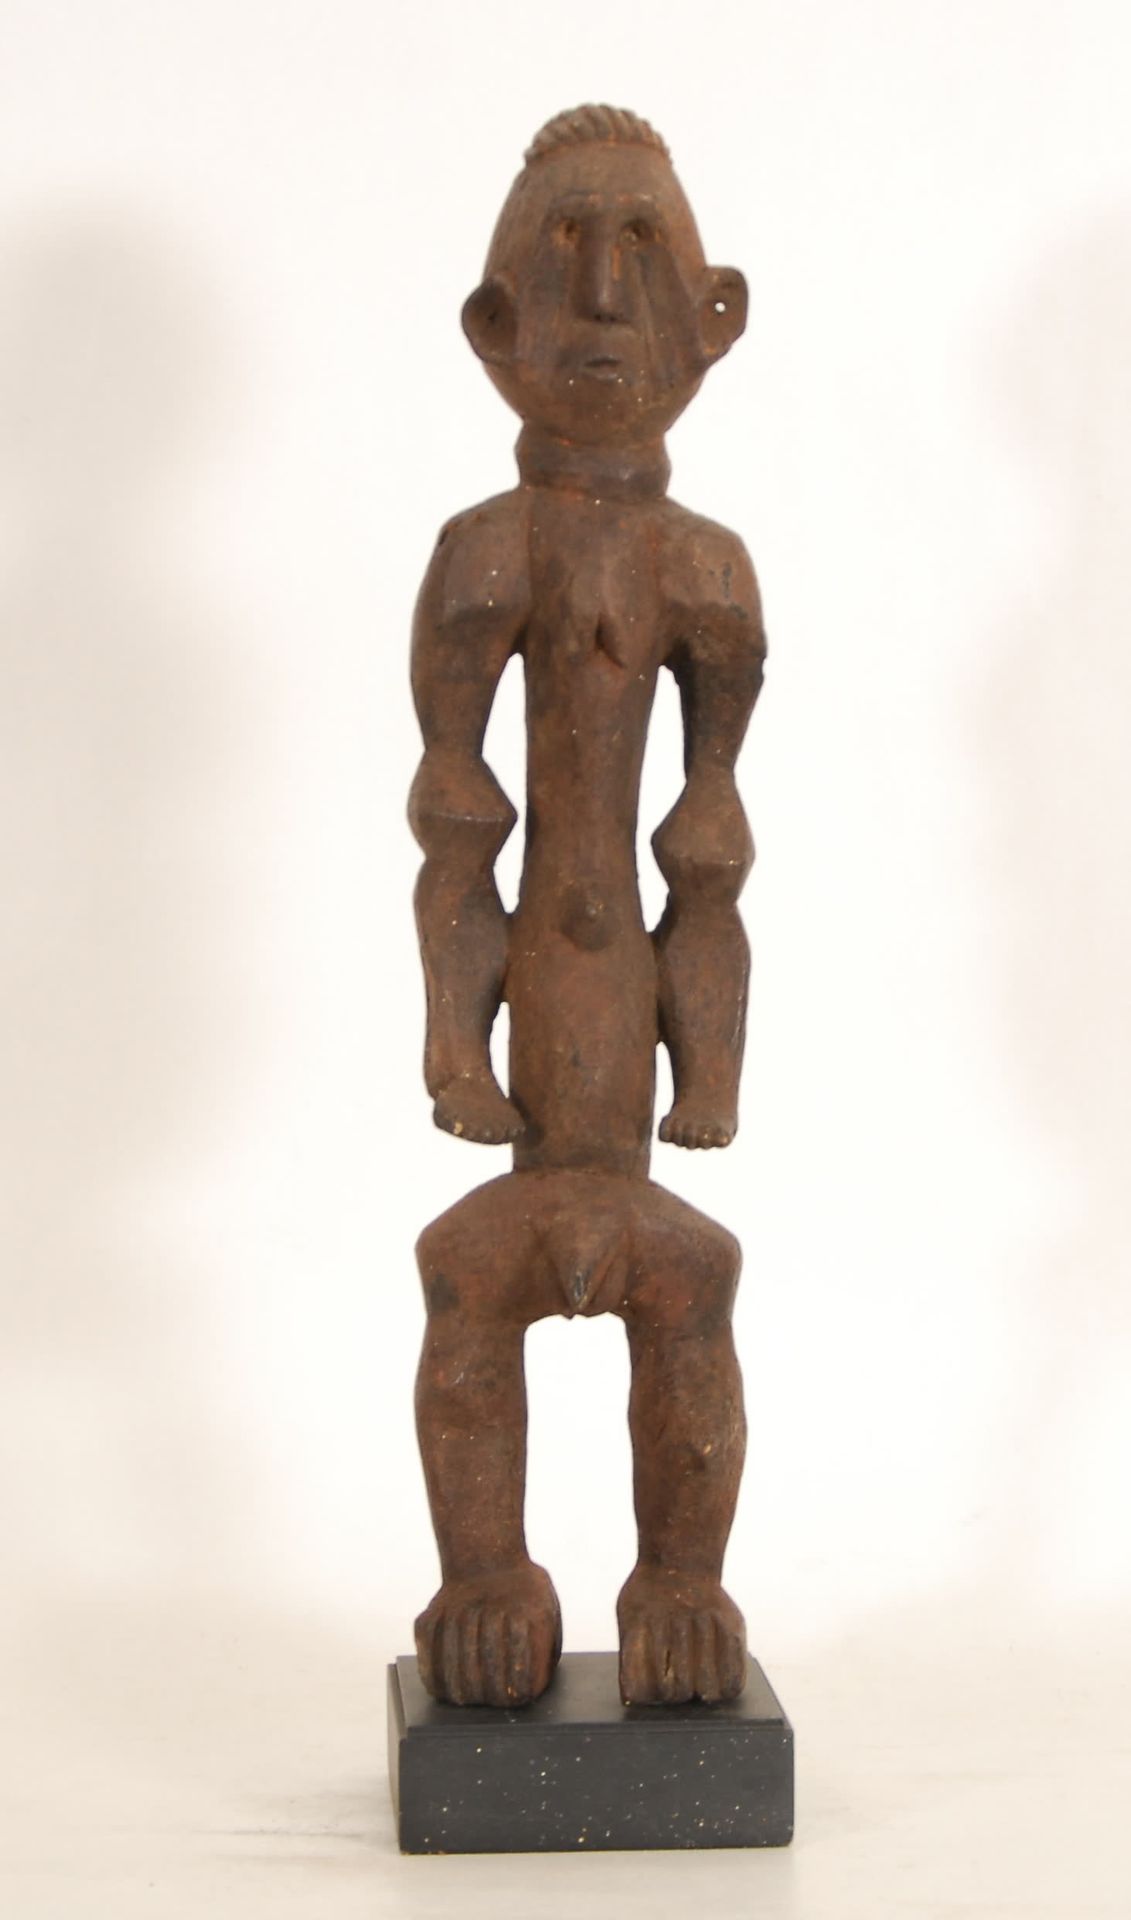 Afrique - Africa Fetish
Legno intagliato, Camerun.
H. 58 cm.
Provenienza: ex col&hellip;